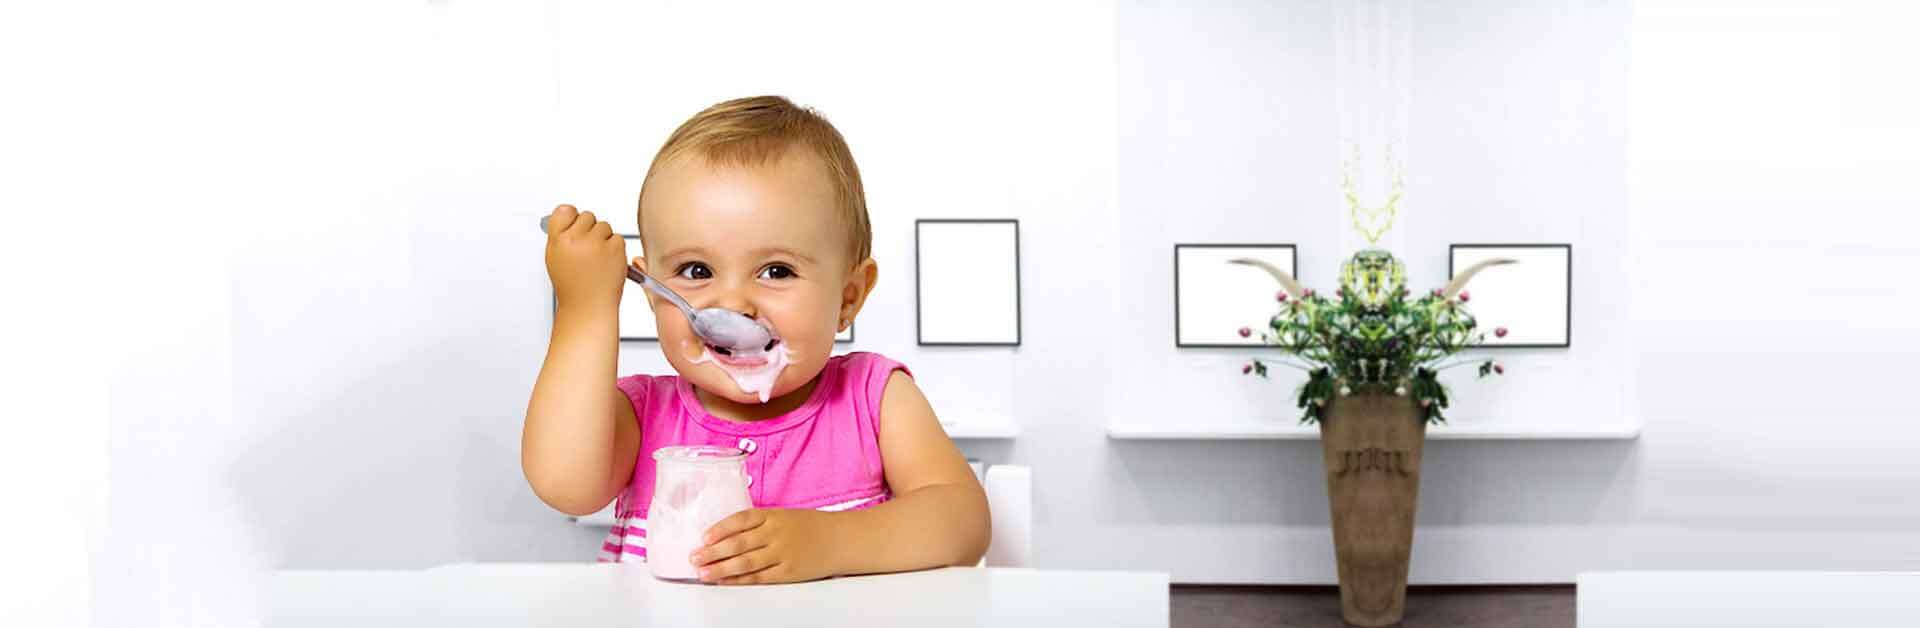 yogurt and your teeth